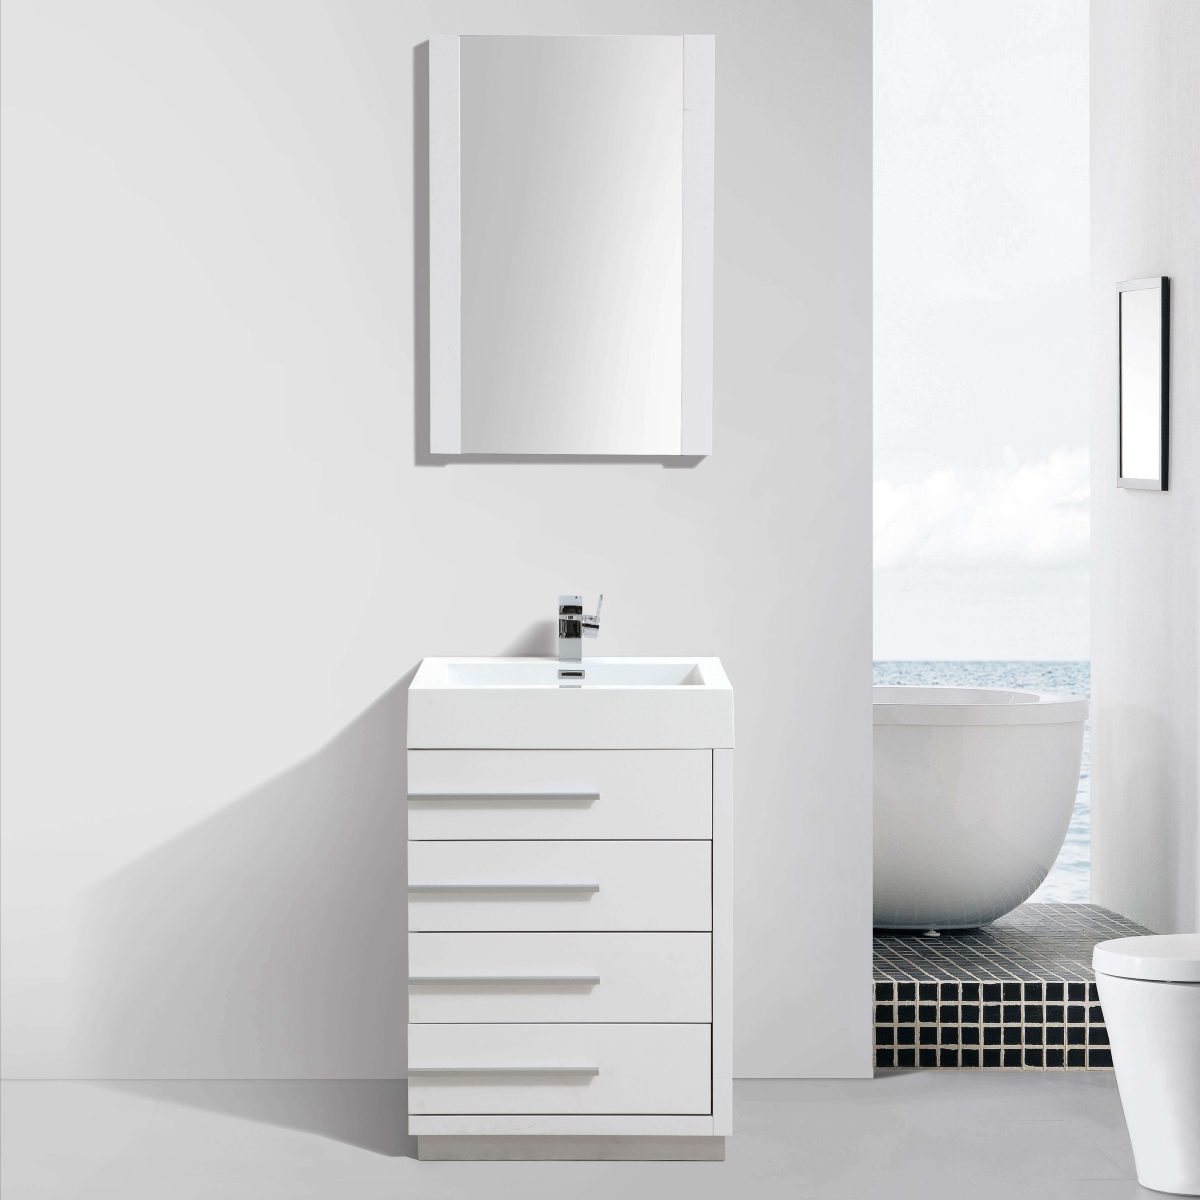 Barcelona 30" Bathroom Vanity  #size_30"  #color_glossy white